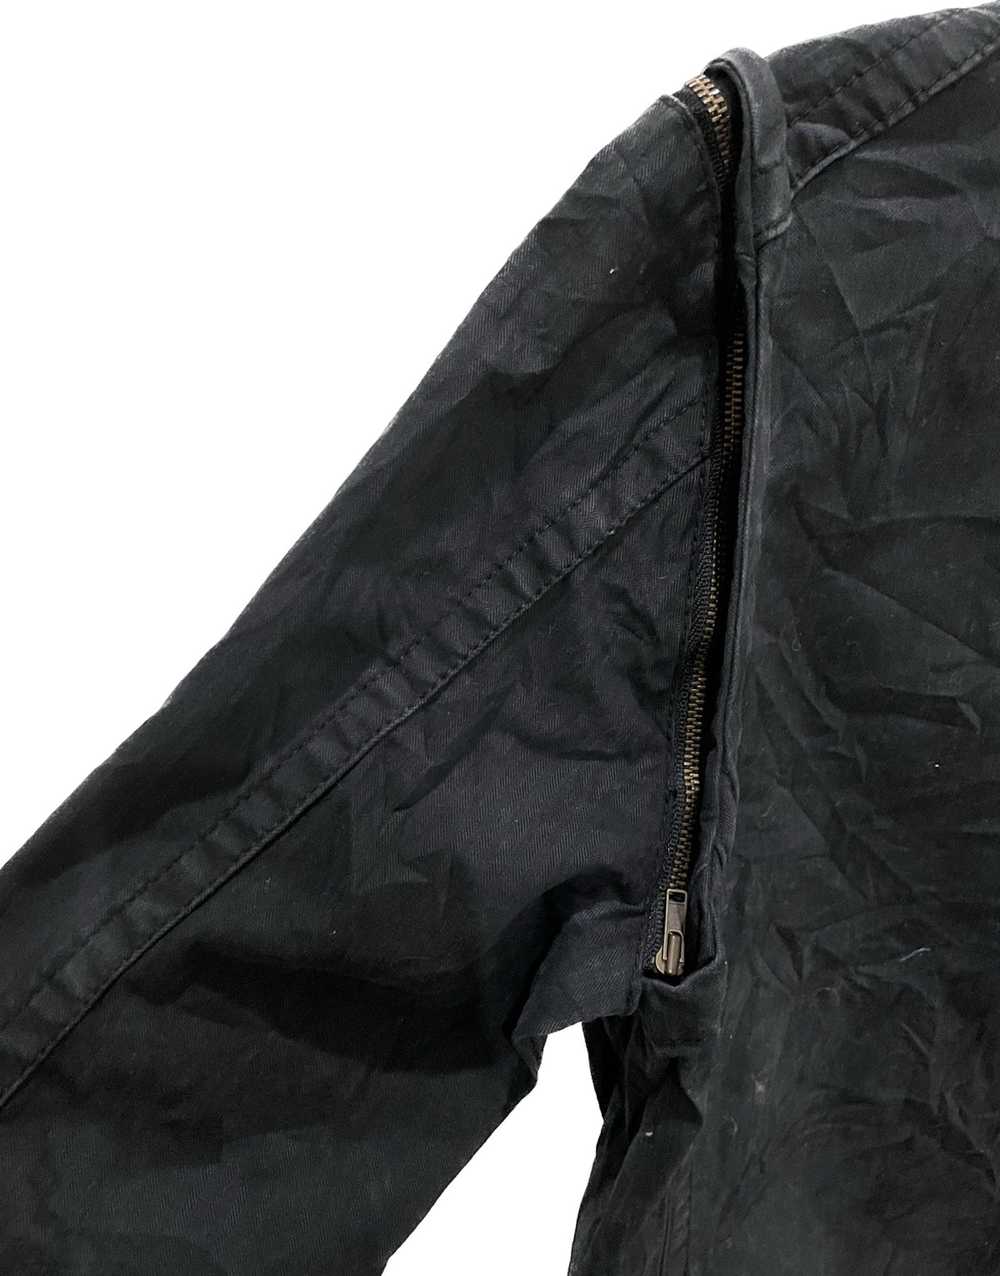 PPFM Rare🤘 PPFM Jacket Removable Sleeves - image 7